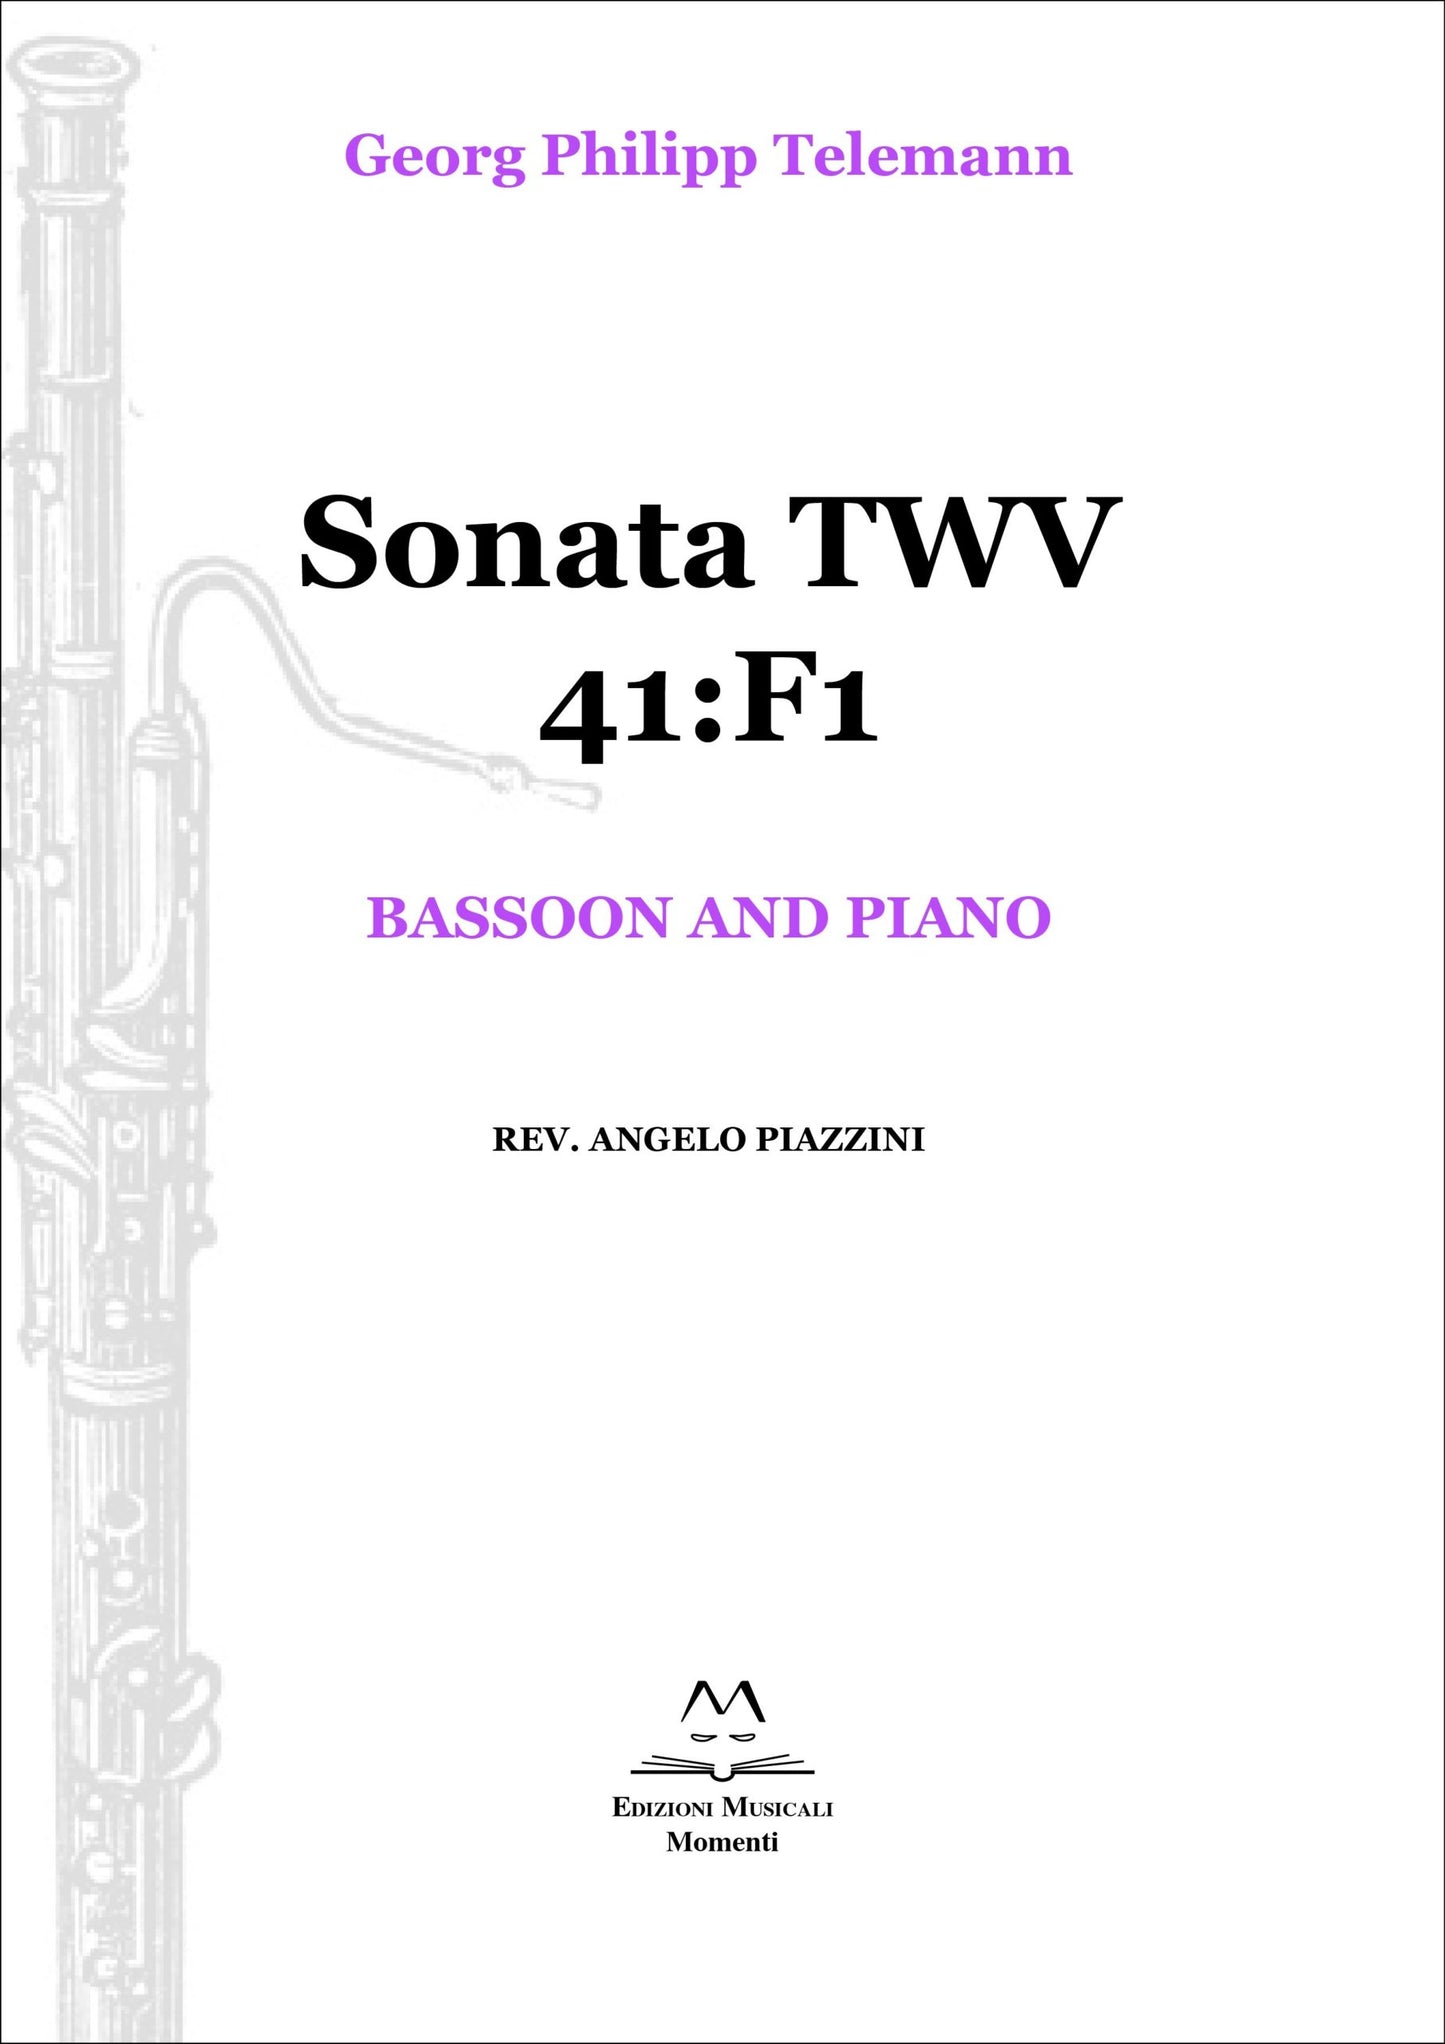 Sonata TWV 41:F1 - Bassoon and piano rev. Angelo Piazzini